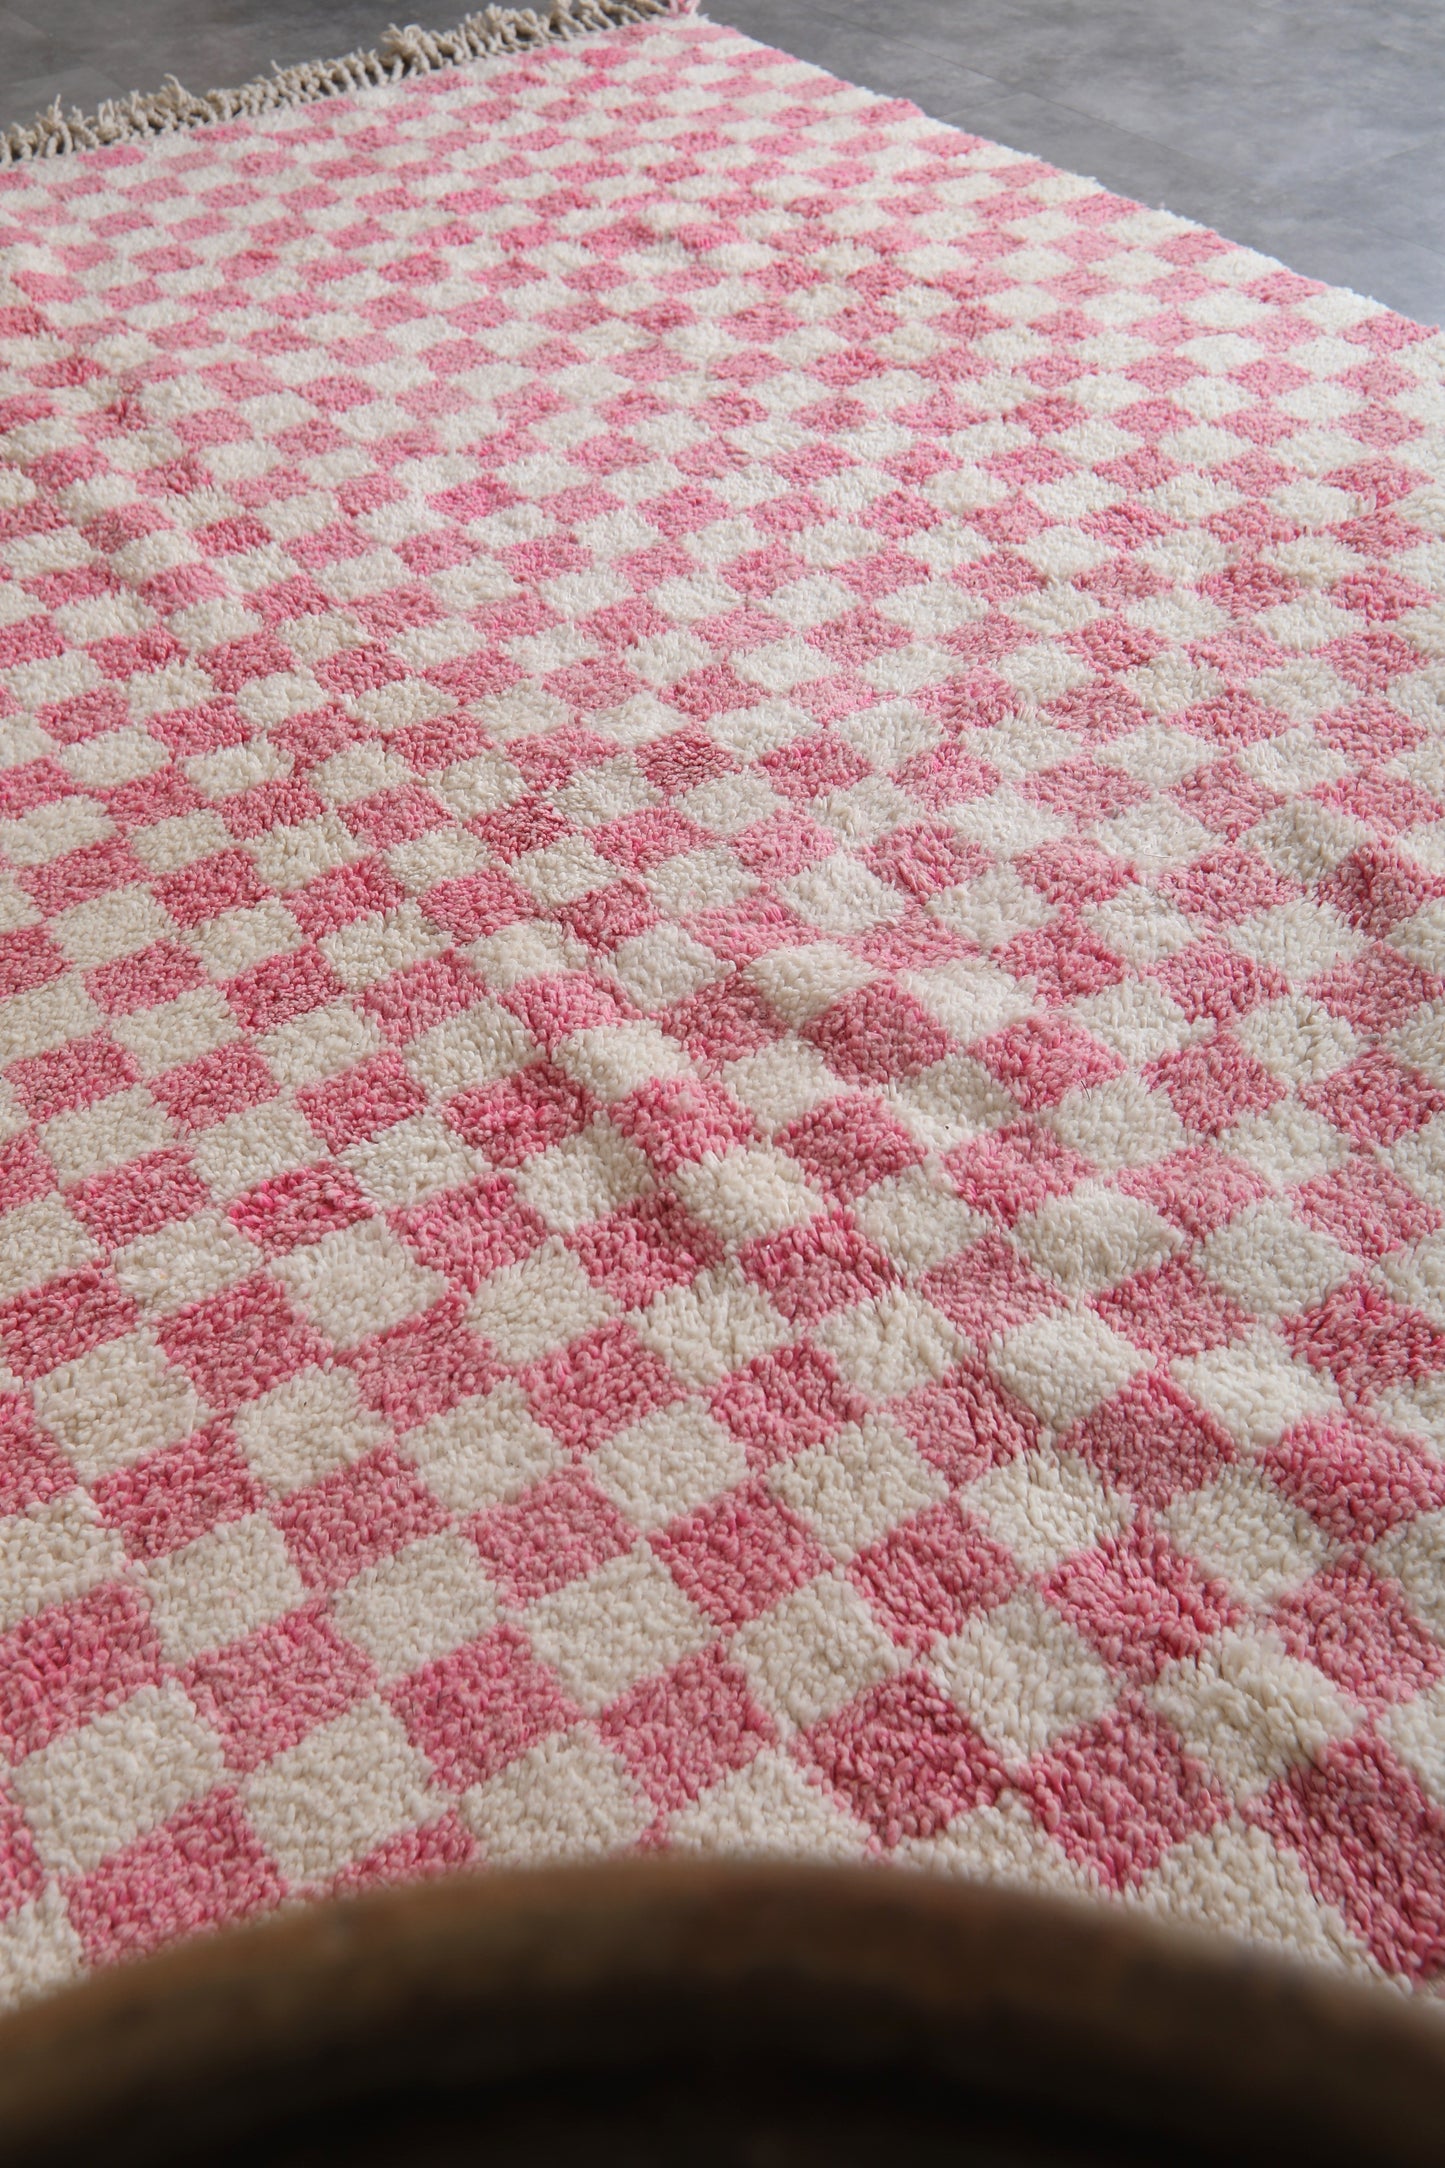 moroccan berber checkered rug 8 X 9.7 Feet - Beni ourain rugs